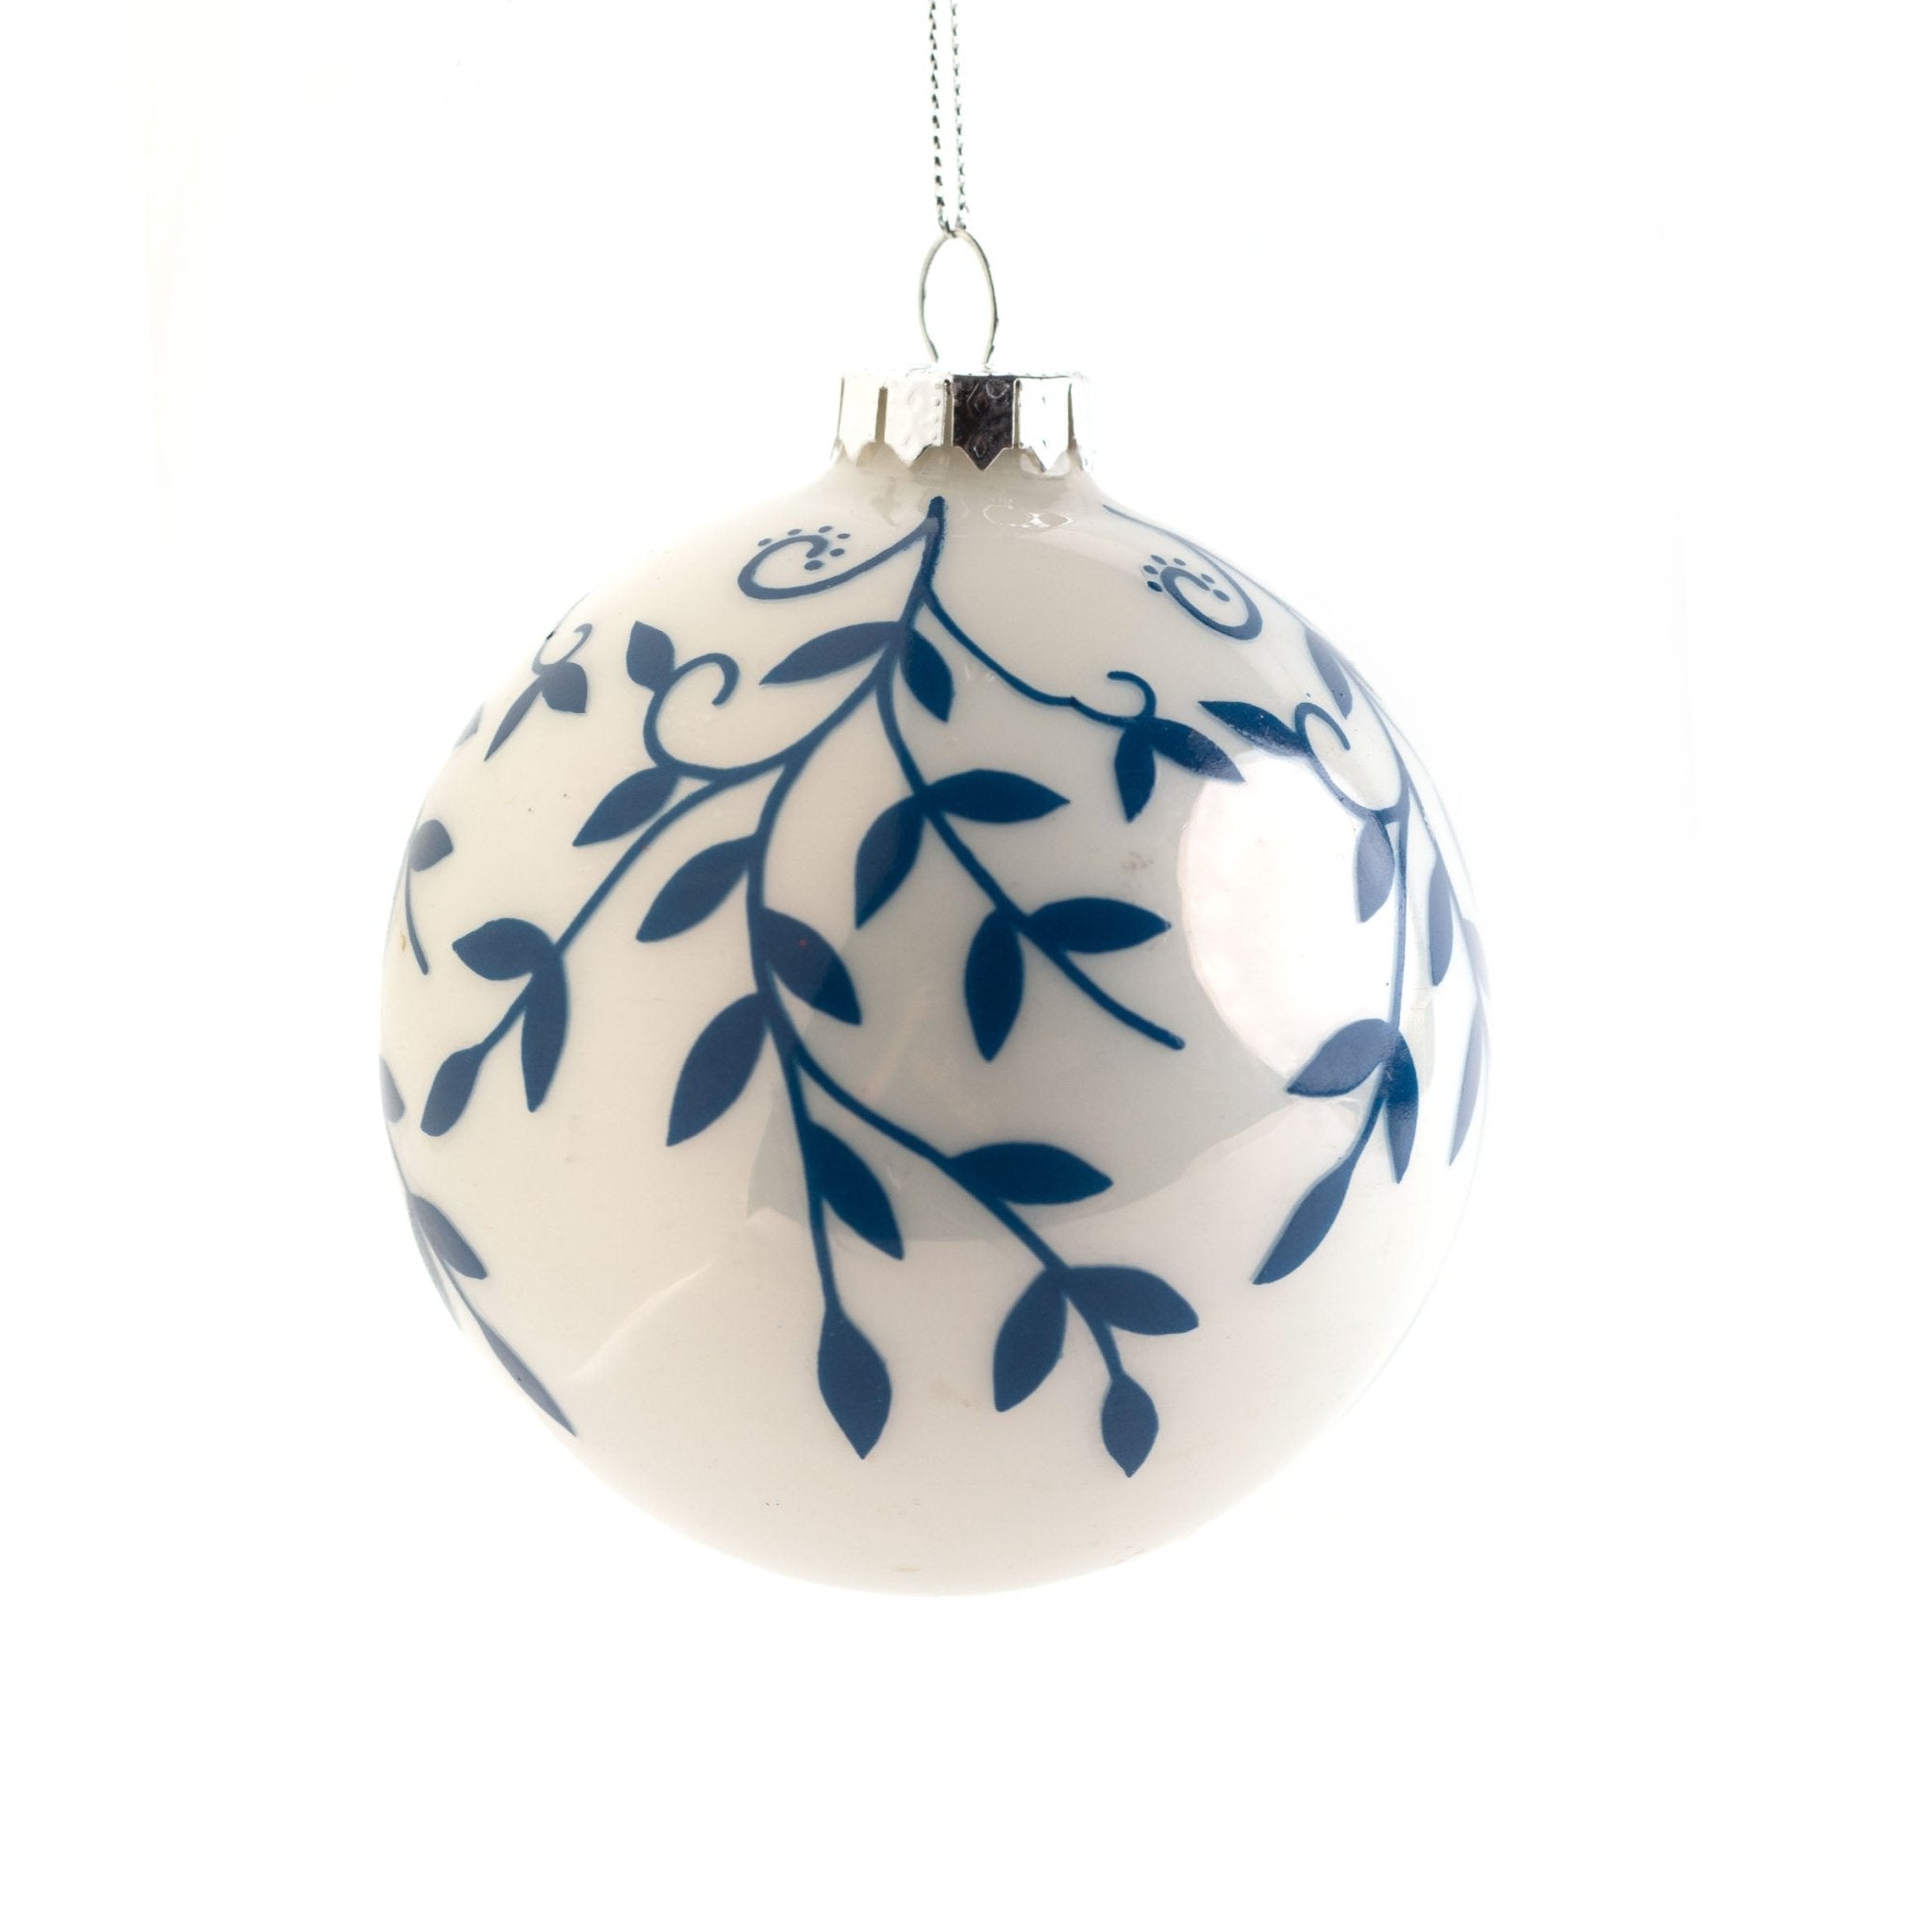 10cm White Blue Round Glass Ornament OGS032 - MODA FLORA Santa's Workshop